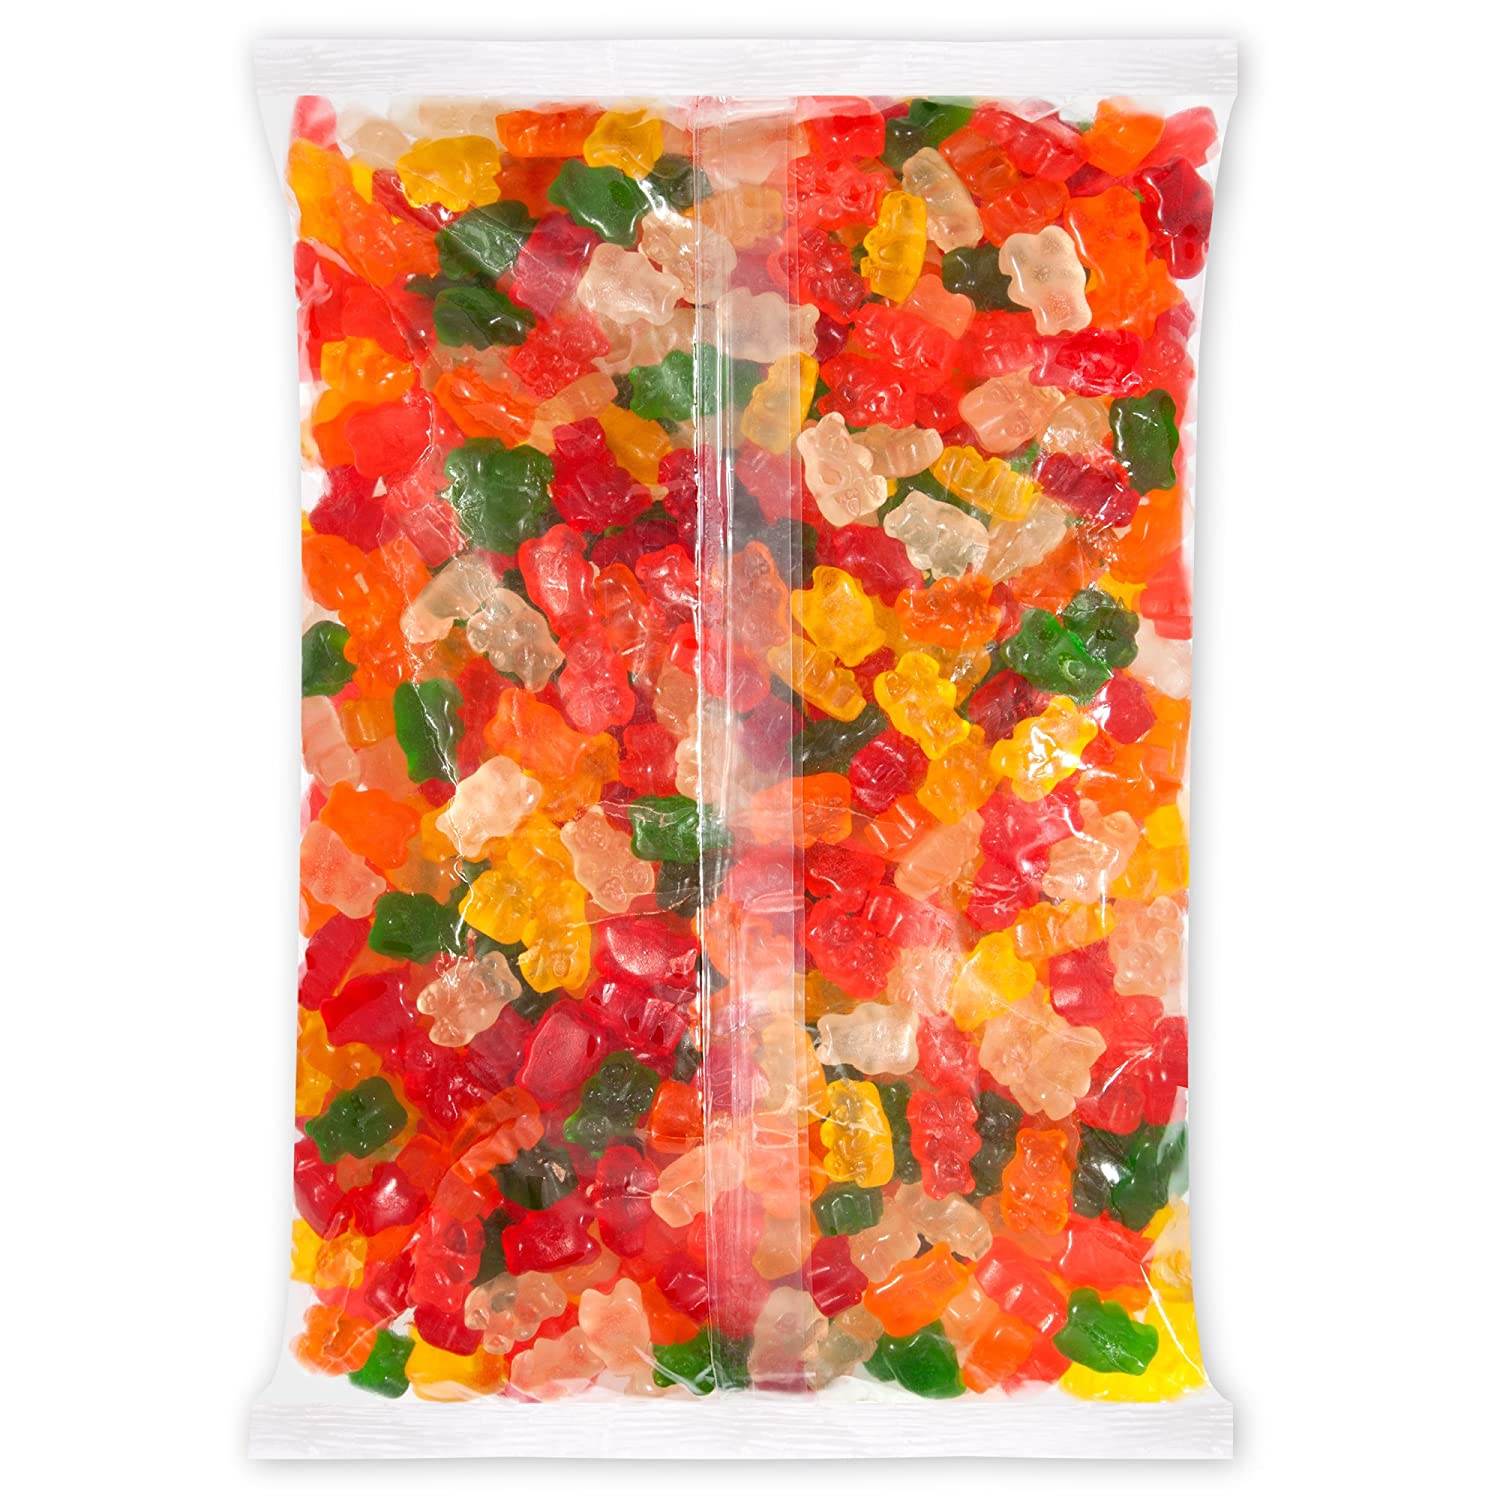 Sugar Free Fruit Gummi Bears